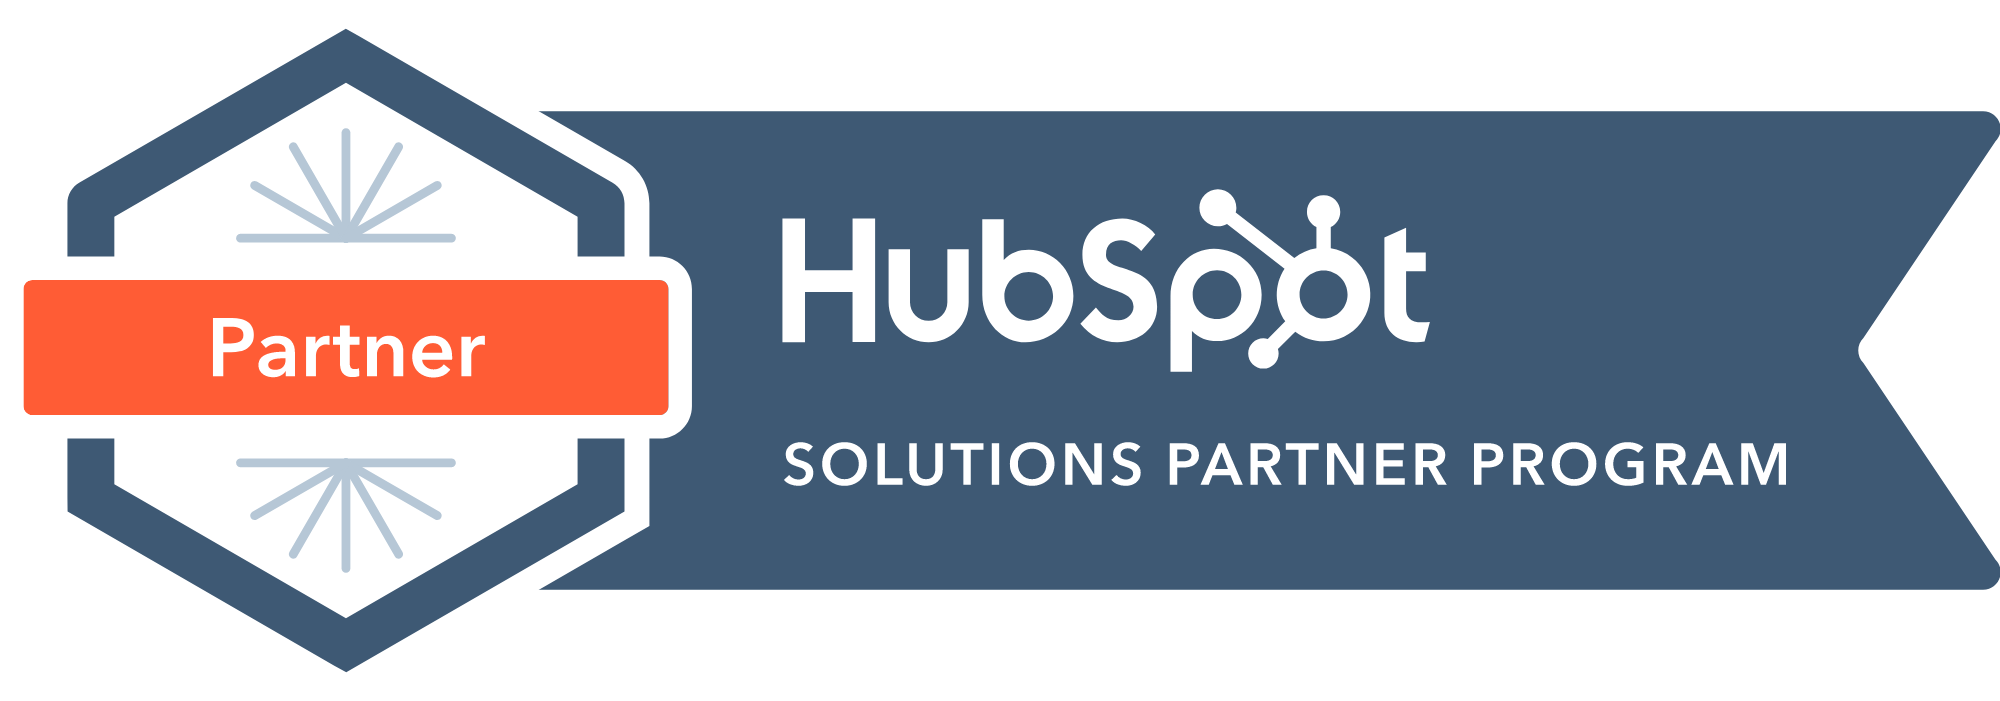 HubSpot-partner-horizontal-color